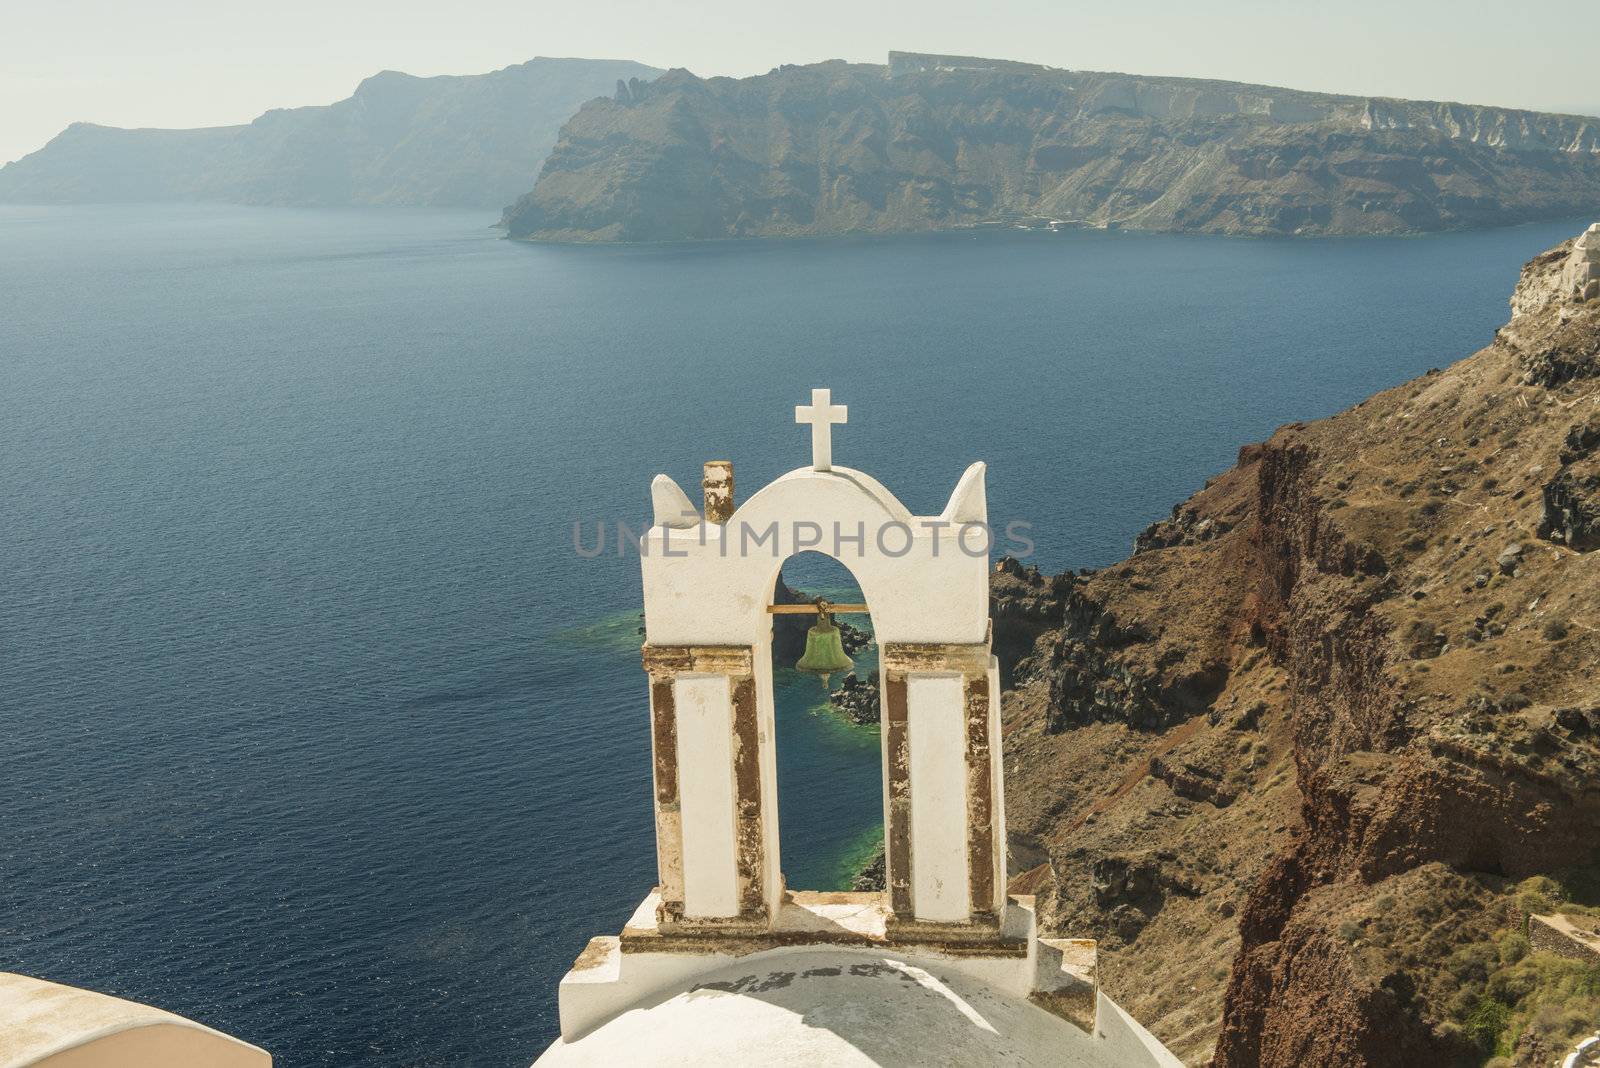  View of the sea and church Oia, Santorini, Greece -October 2012.